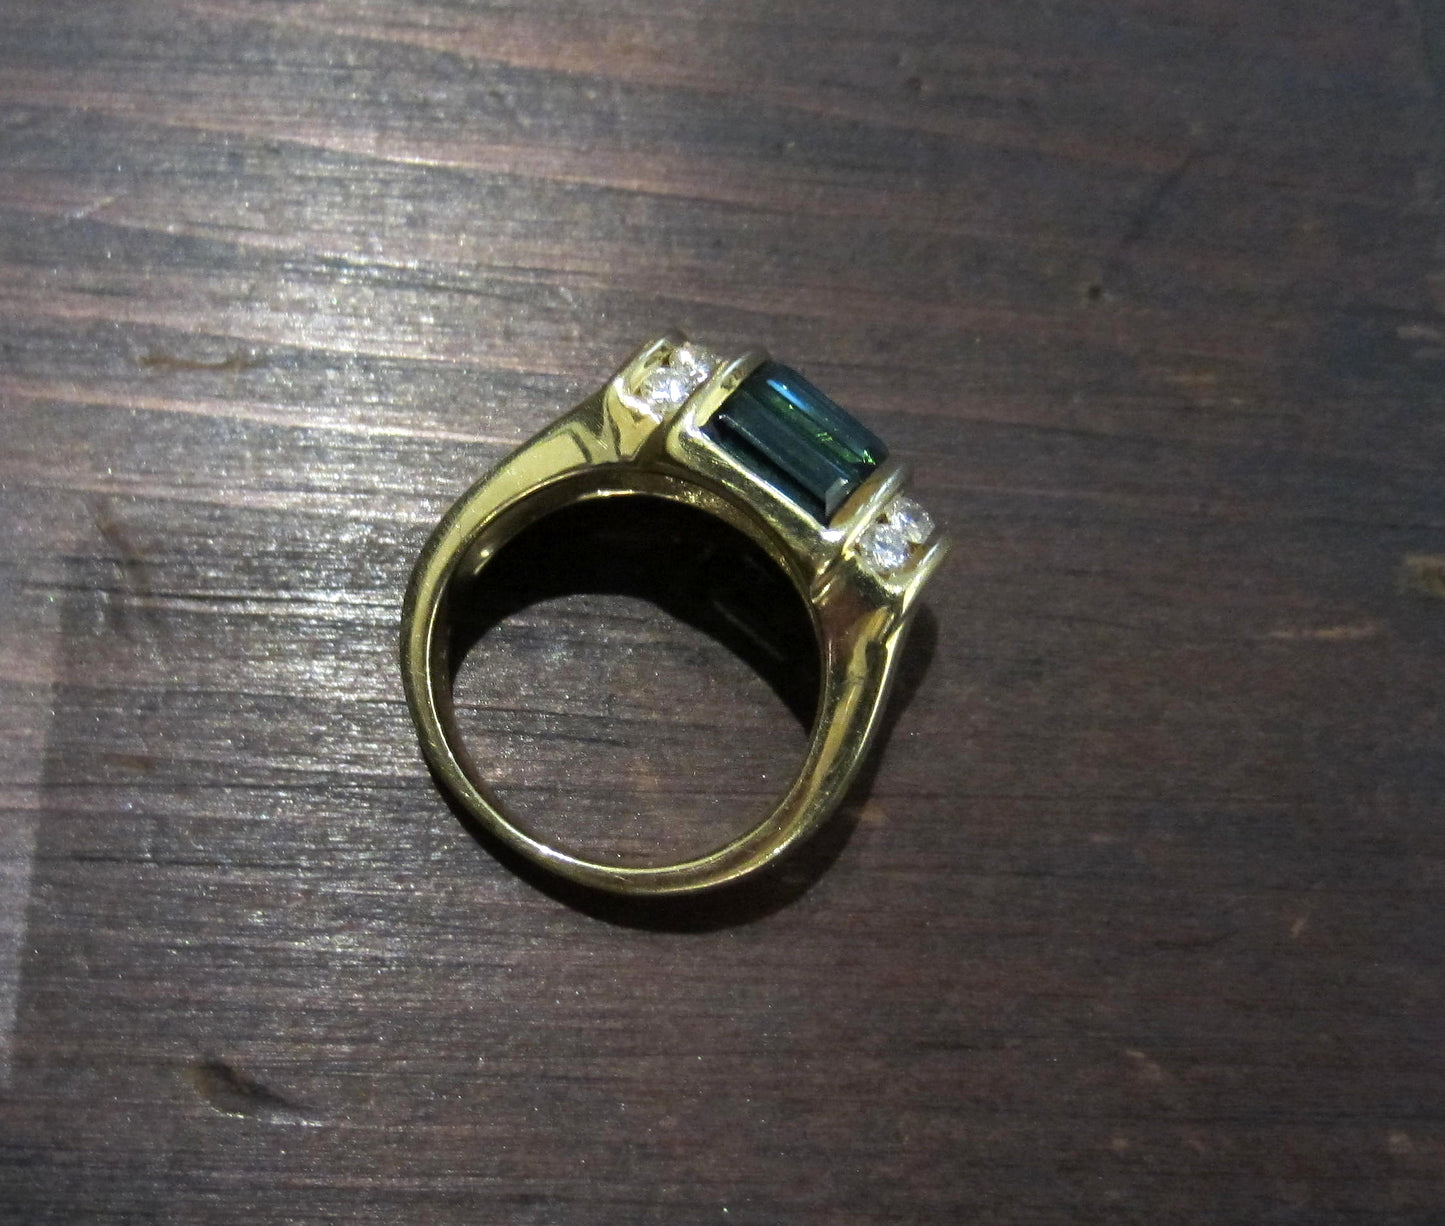 SOLD--Very Chic Tourmaline and Diamond Ring 18k c. 1980s